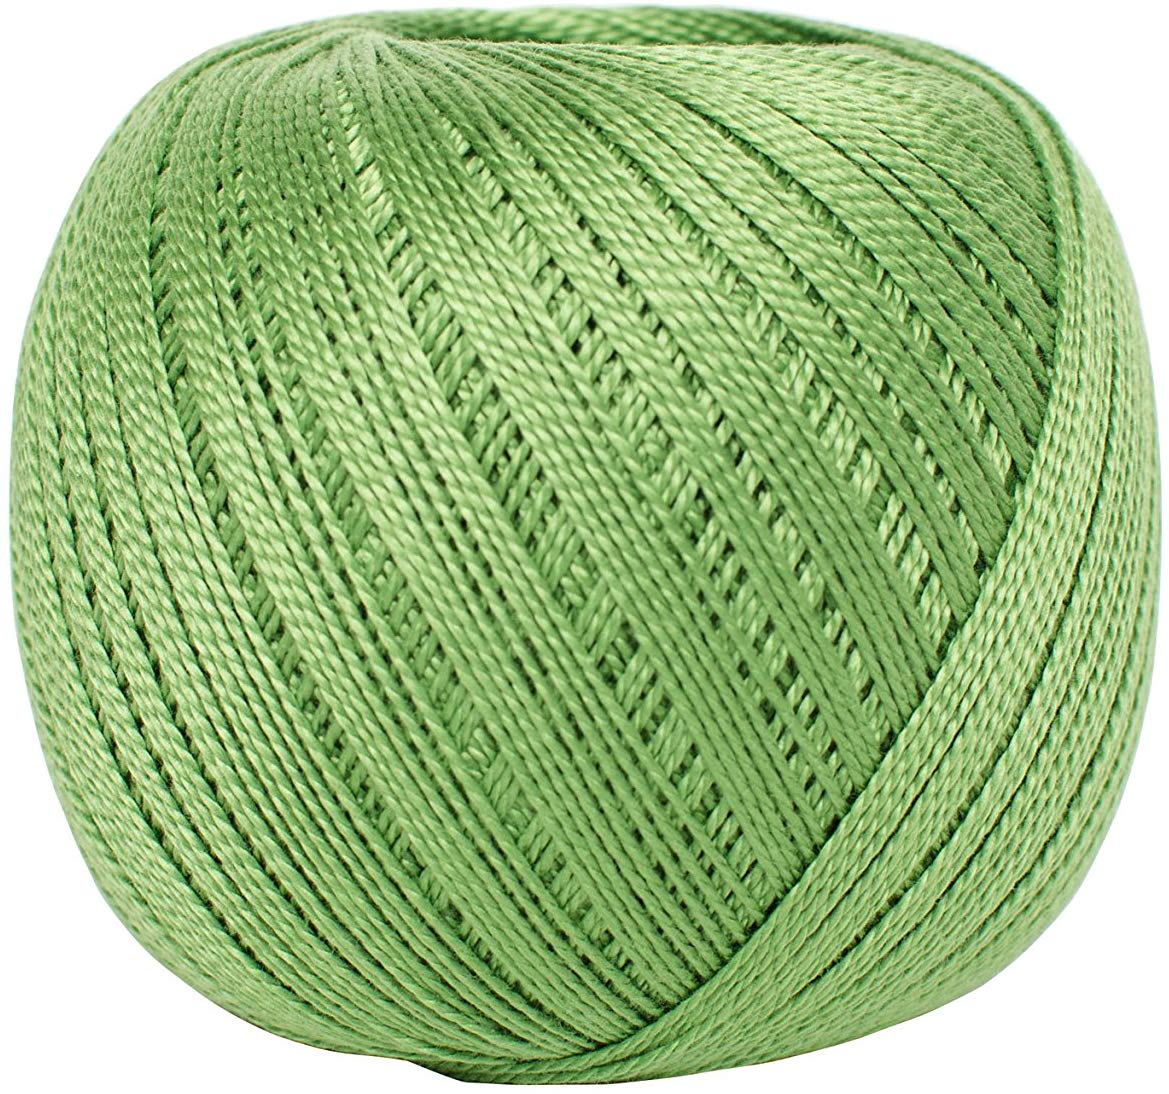 Threads & Yarns - Classic Crochet Thread - DMC